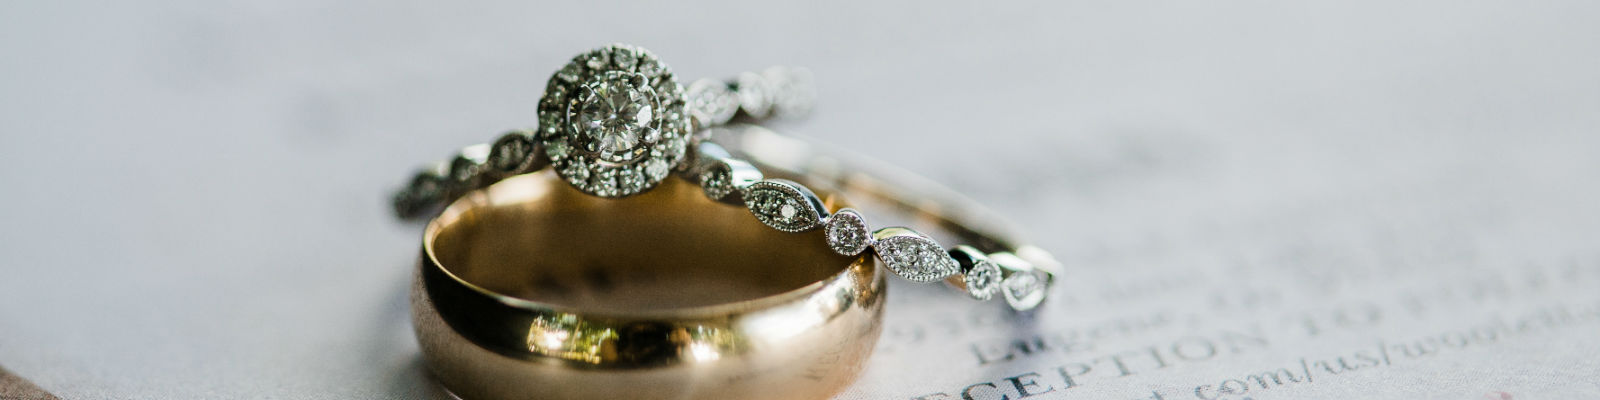 4 C's of Diamonds by Golden Tree Jewellers